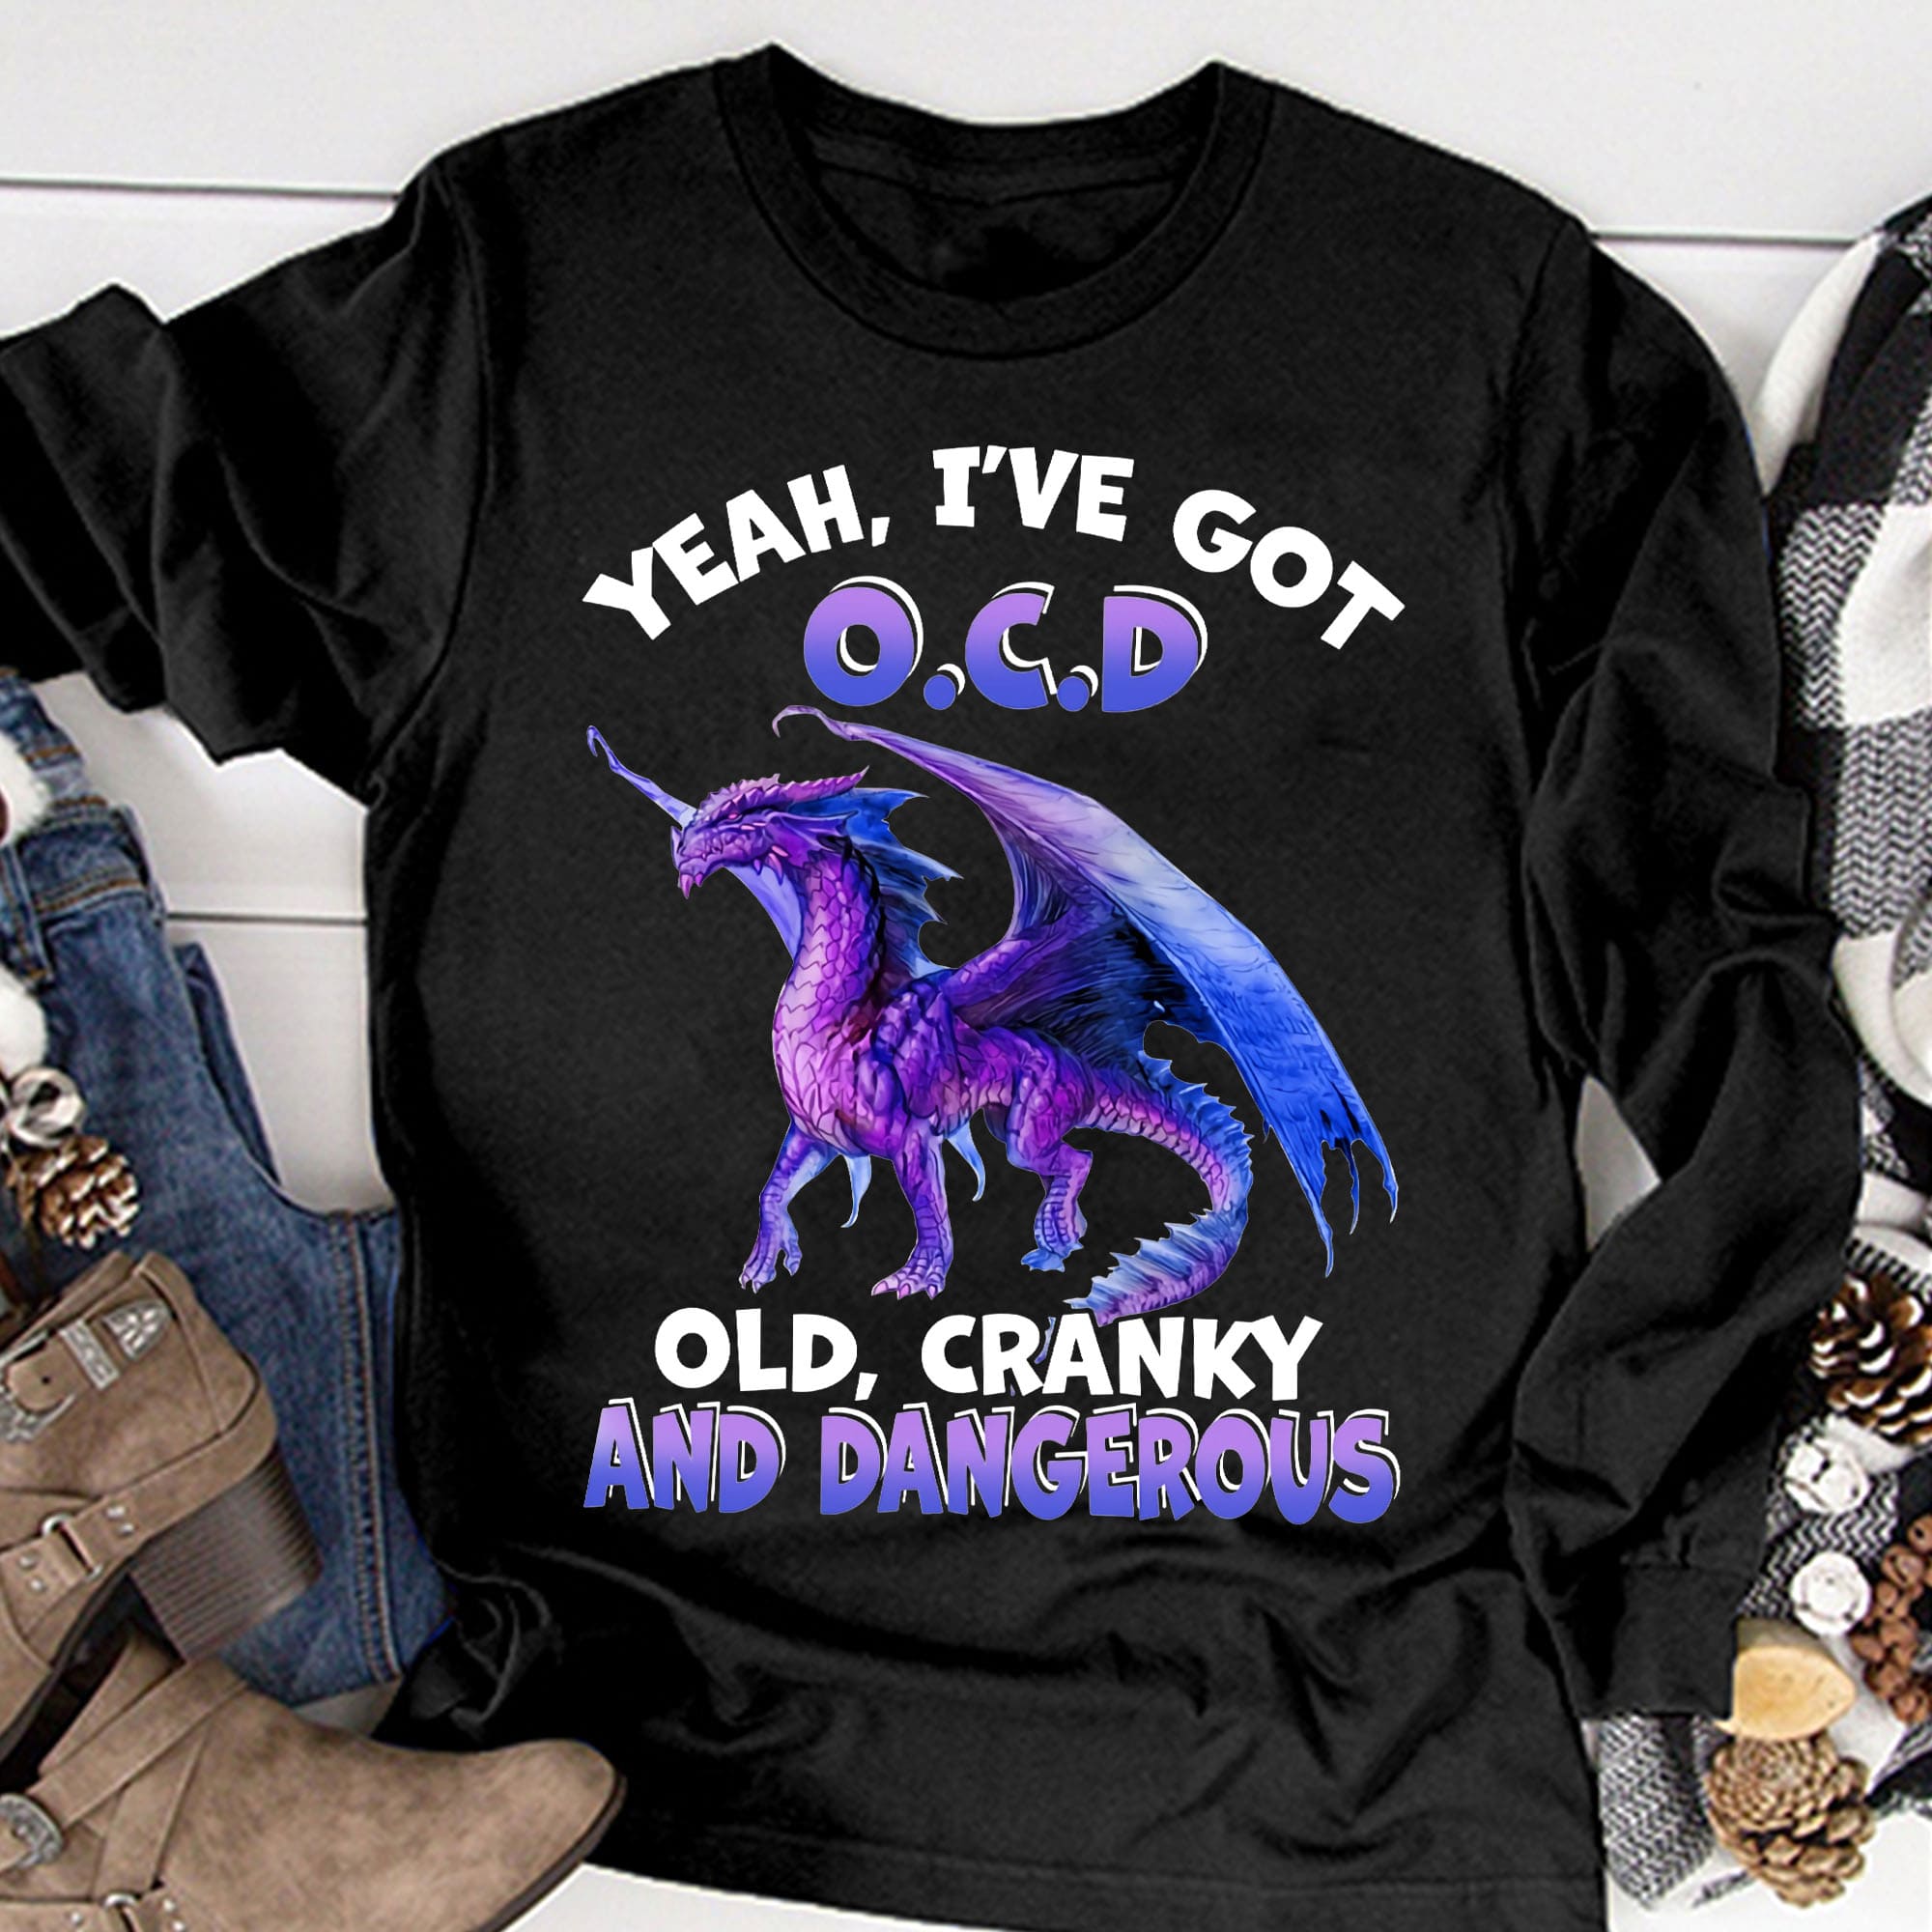 Yeah I've got OCD - Old cranky and dangerous, Dangerous dragon T-shirt